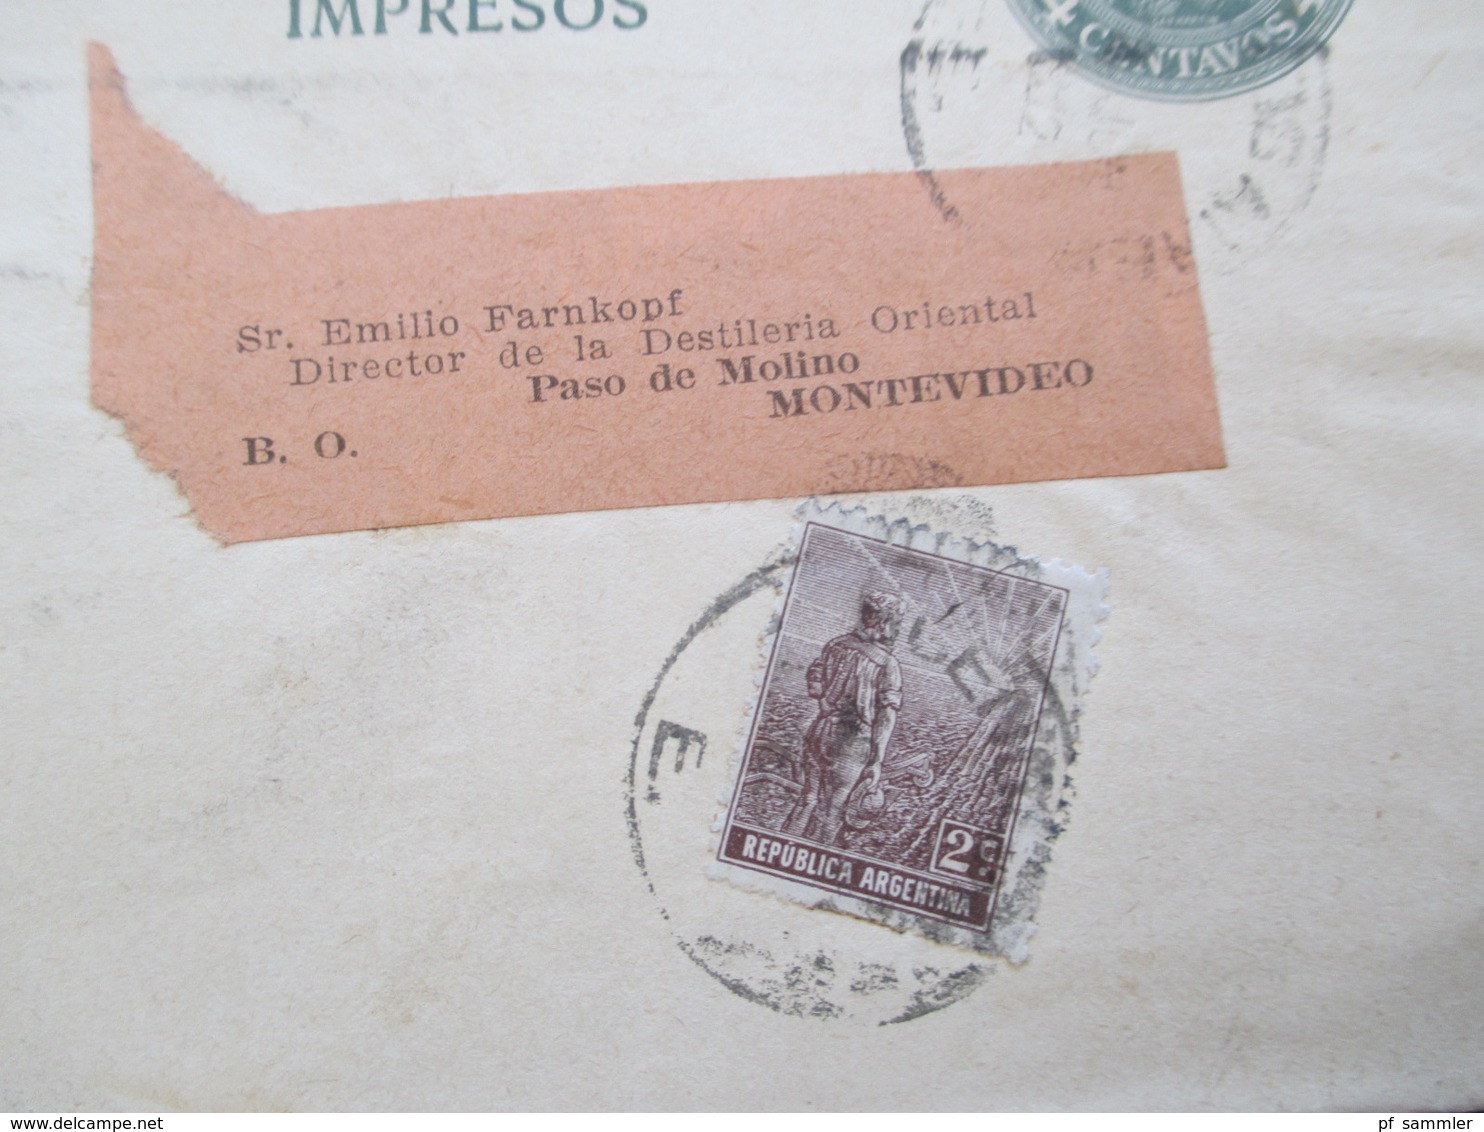 Argentinien 1912 Streifband Mit Zusatzfrankatur An Emilio Farnkopf Director De La Destileria Oriental Paso De Molino - Briefe U. Dokumente